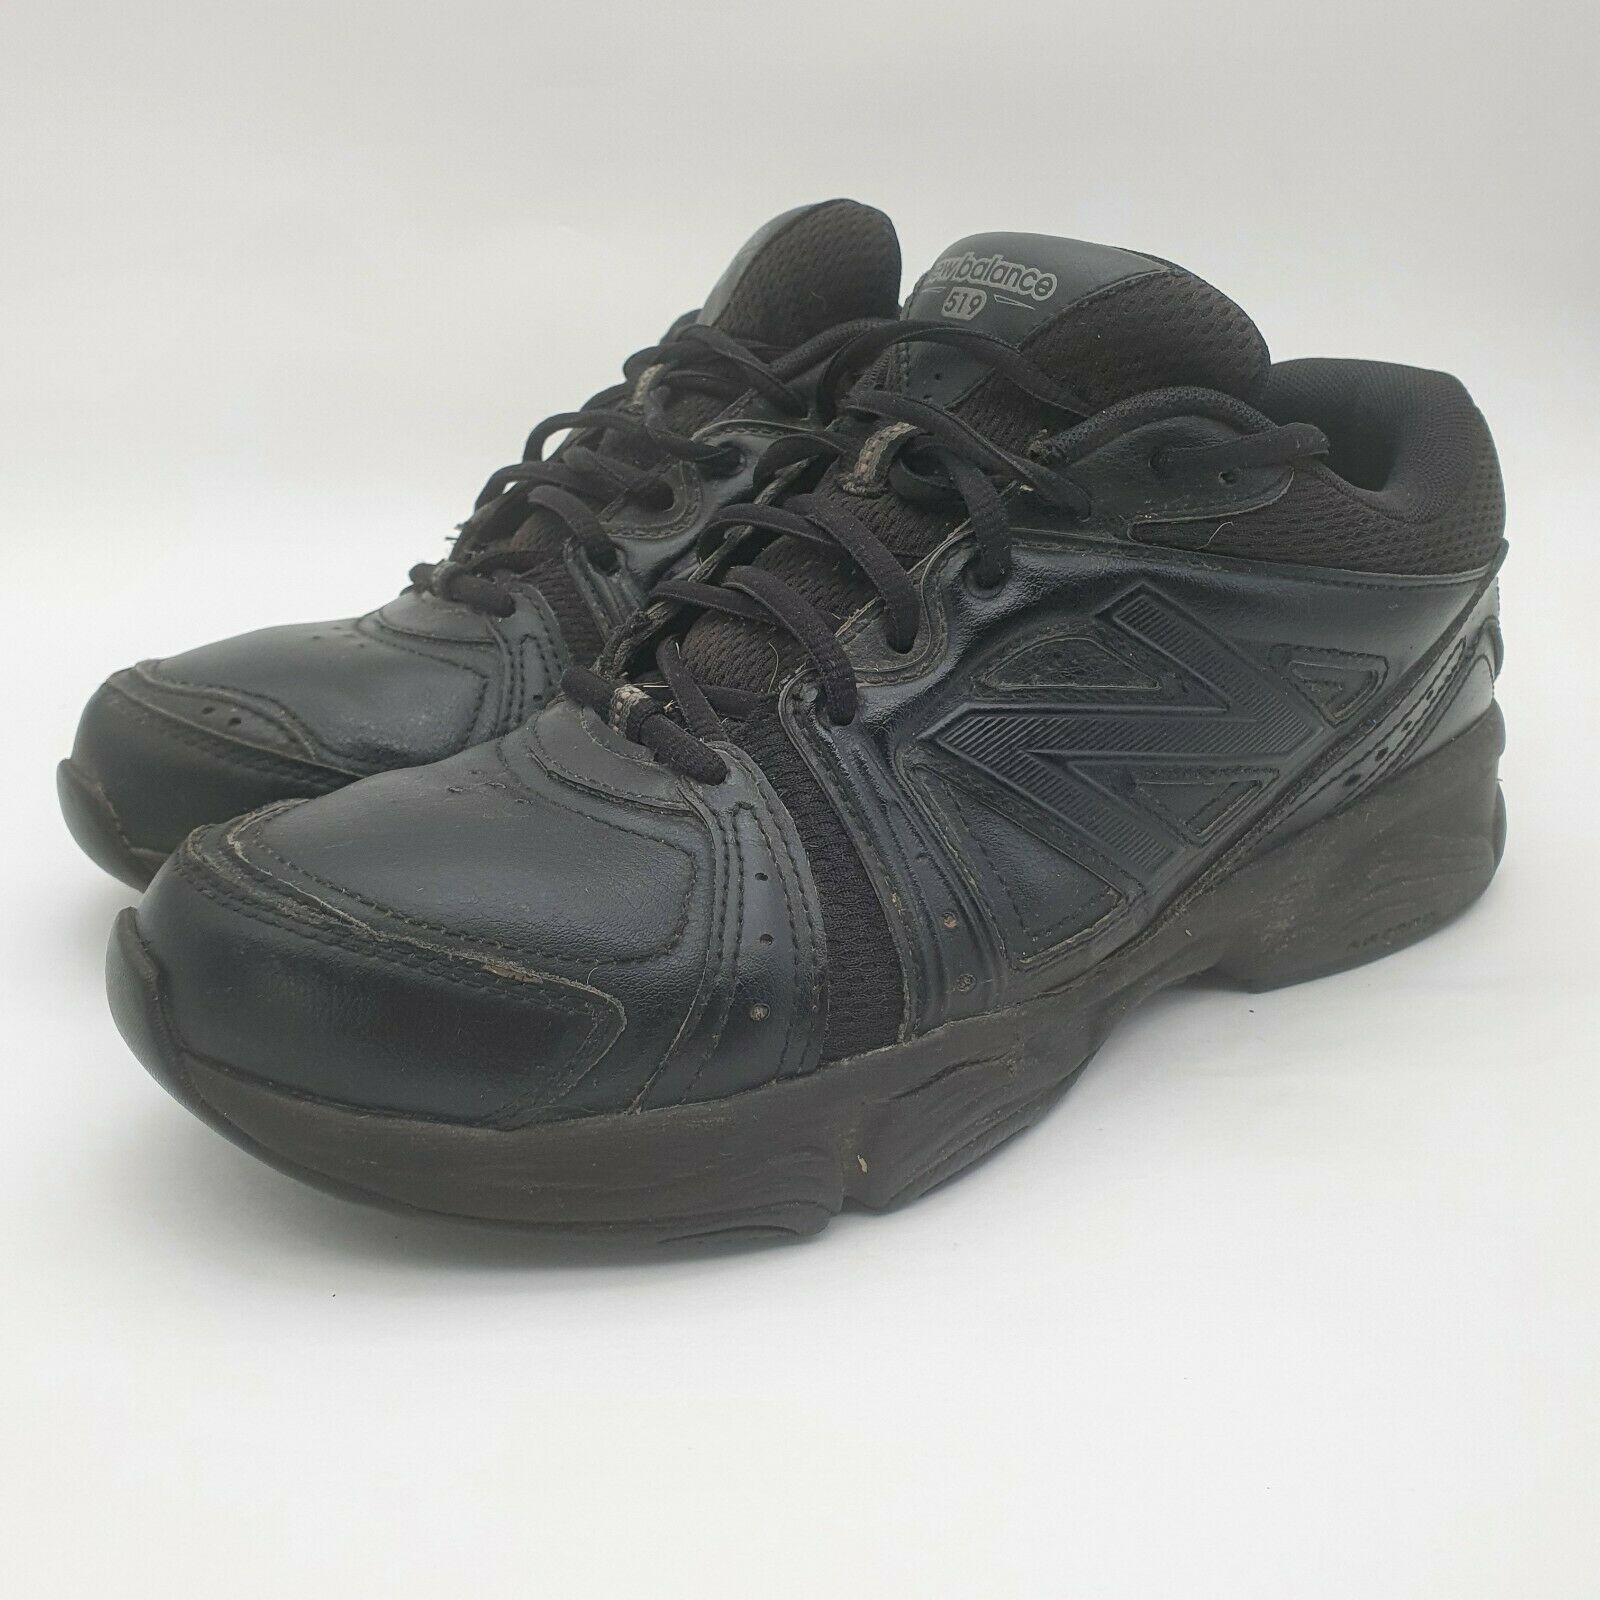 New Balance 519 Cross Training Shoes MX519BK Men's Size 9.5 D - Athletic